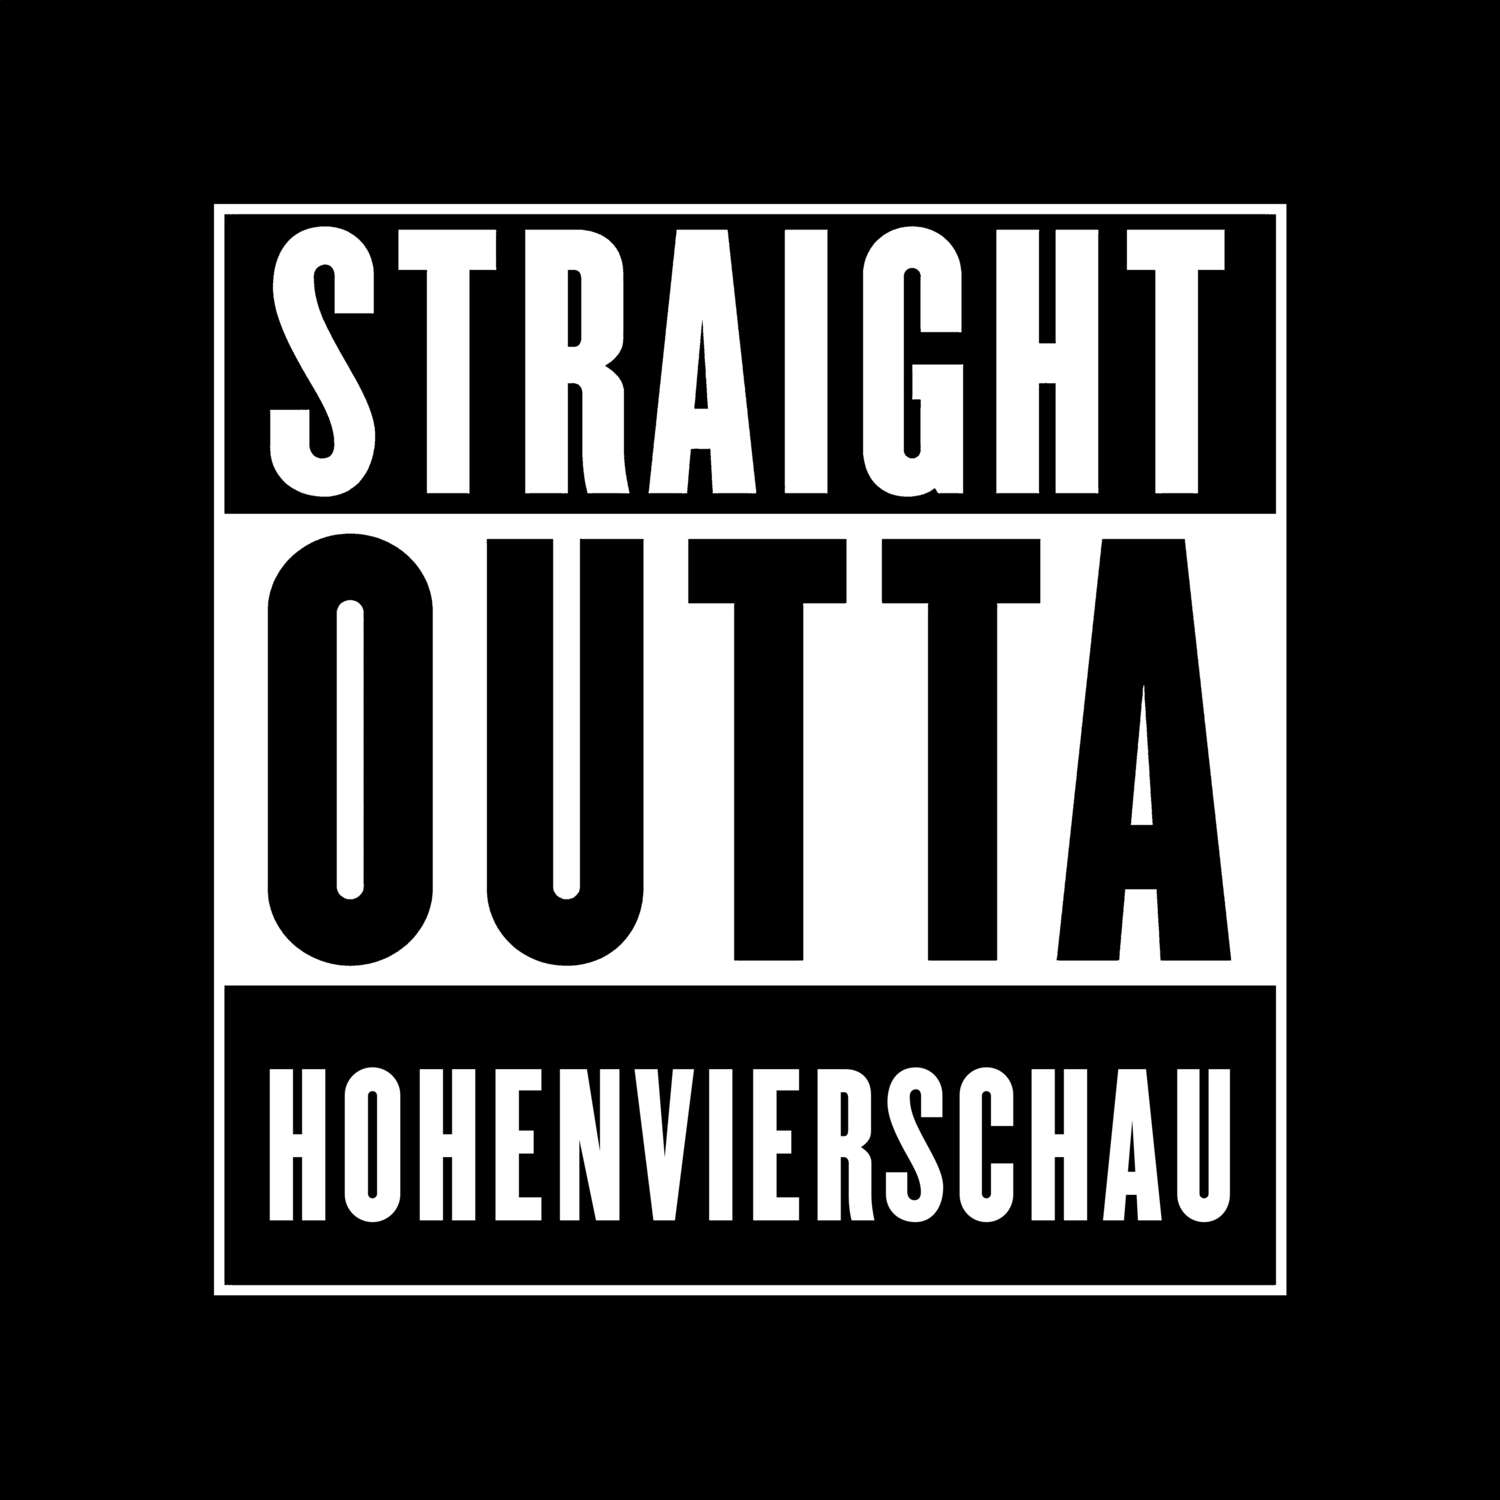 Hohenvierschau T-Shirt »Straight Outta«